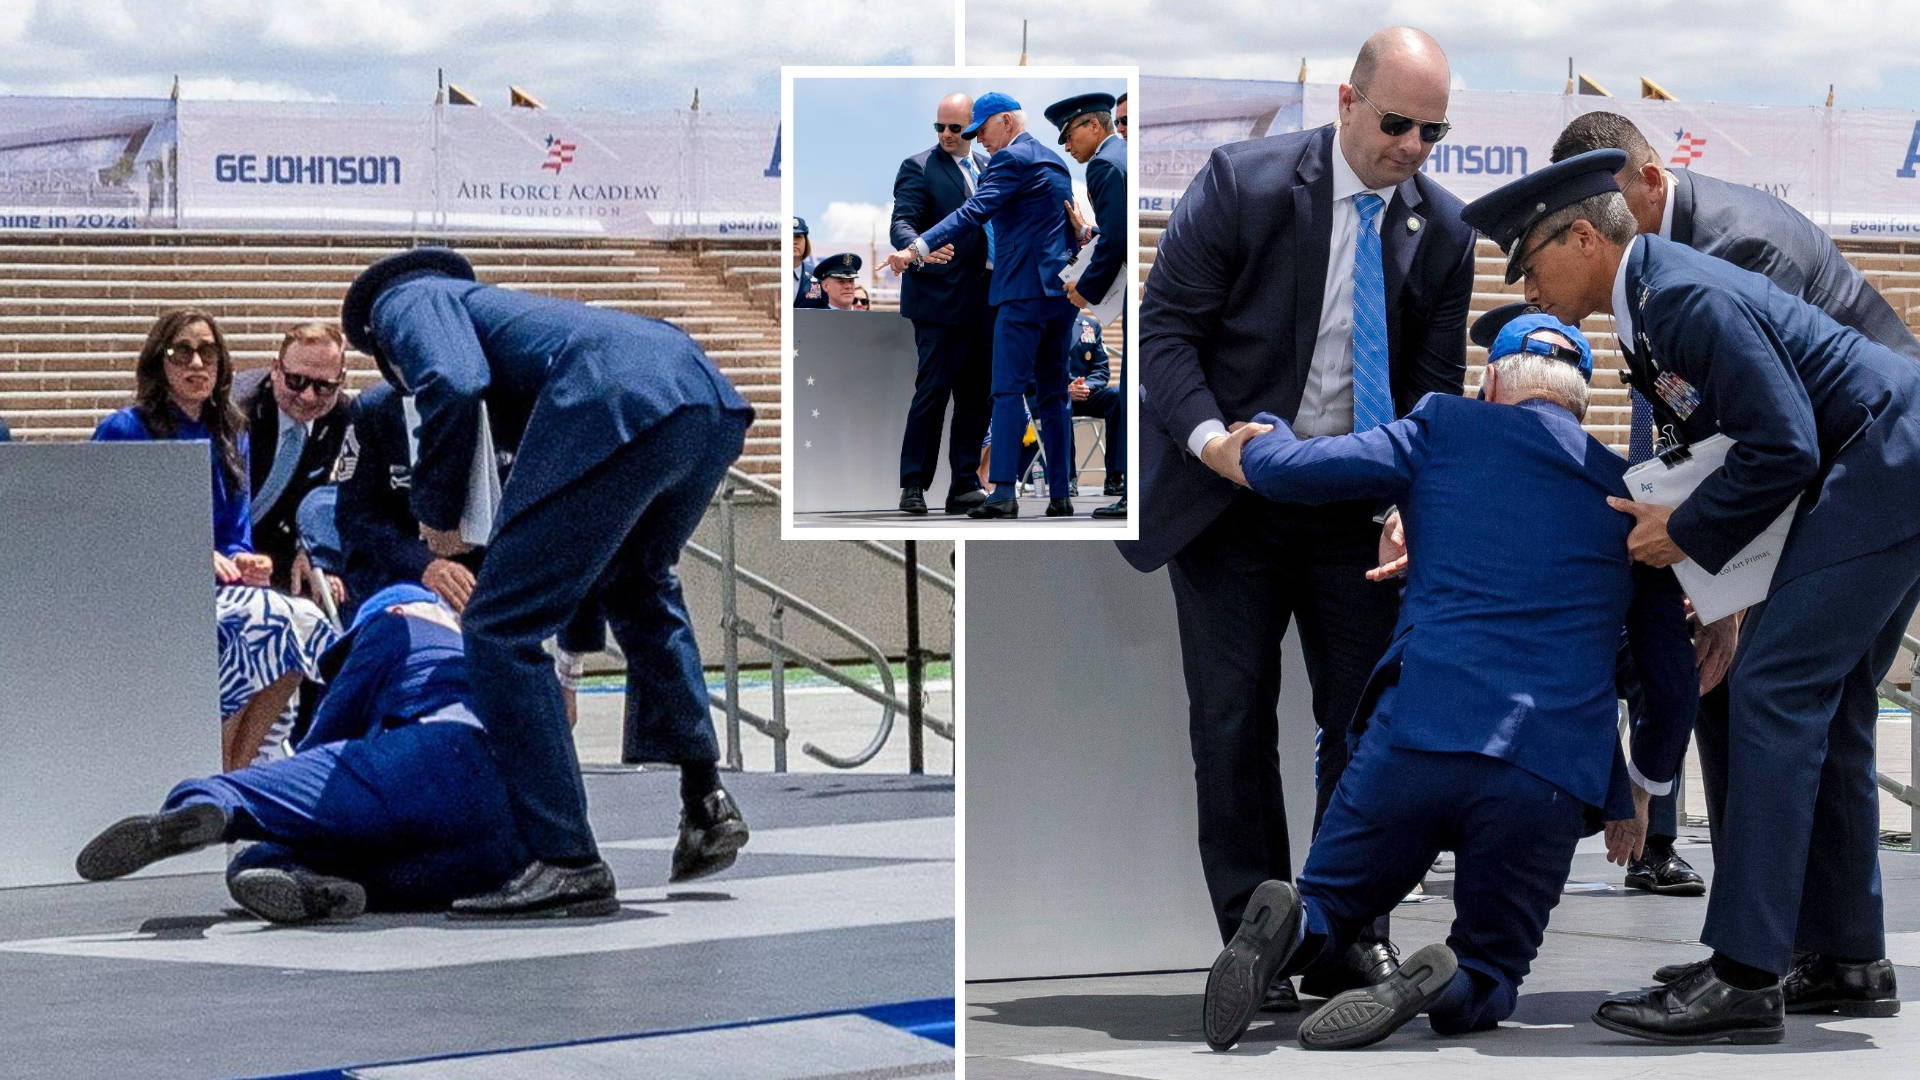 US President Joe Biden trips and falls during Air Force graduation ceremony  - LBC